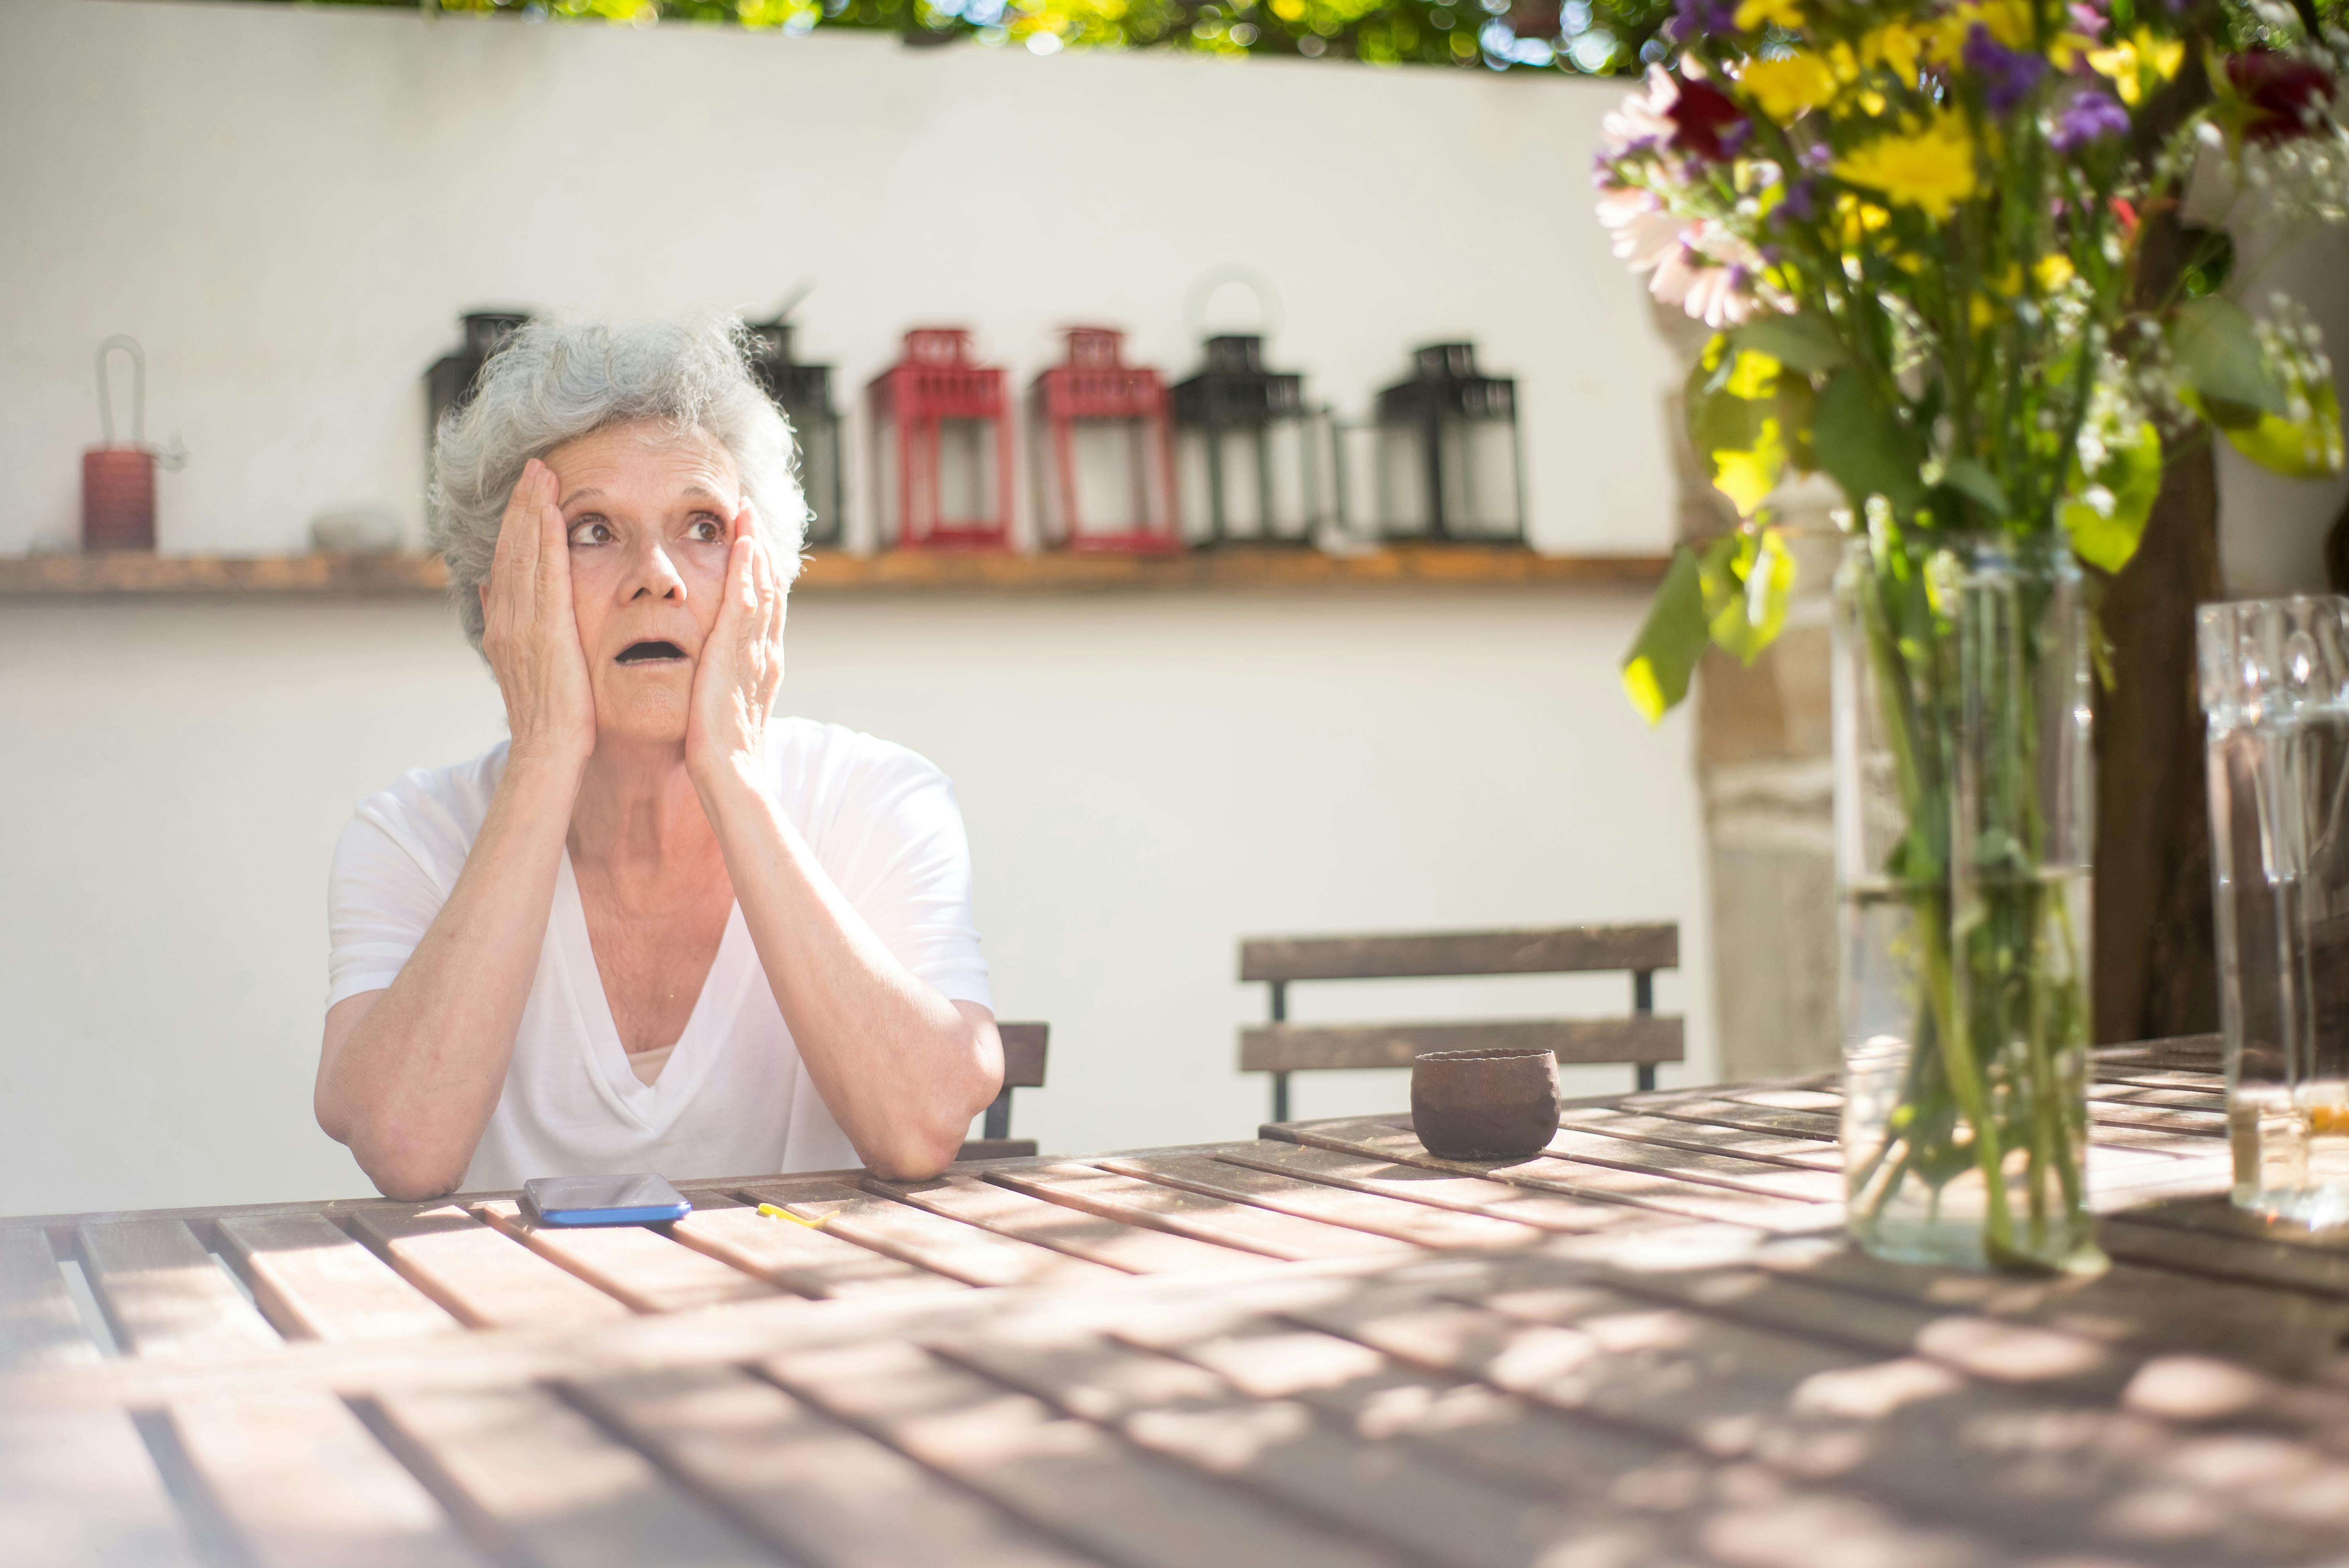 A shocked senior woman | Source: Pexels